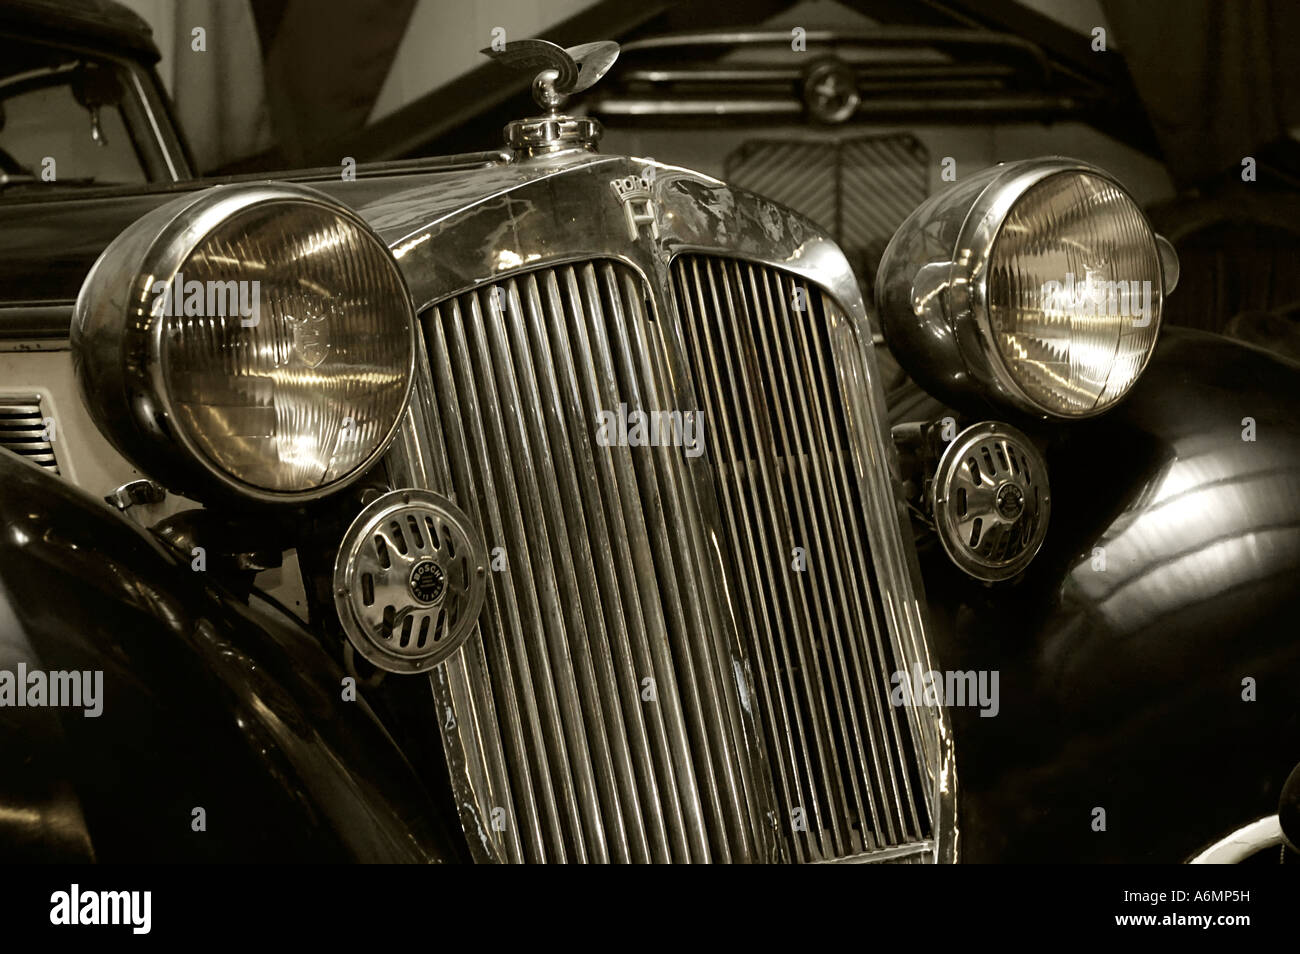 Black Horch 853 1935 classic vintage car Stock Photo